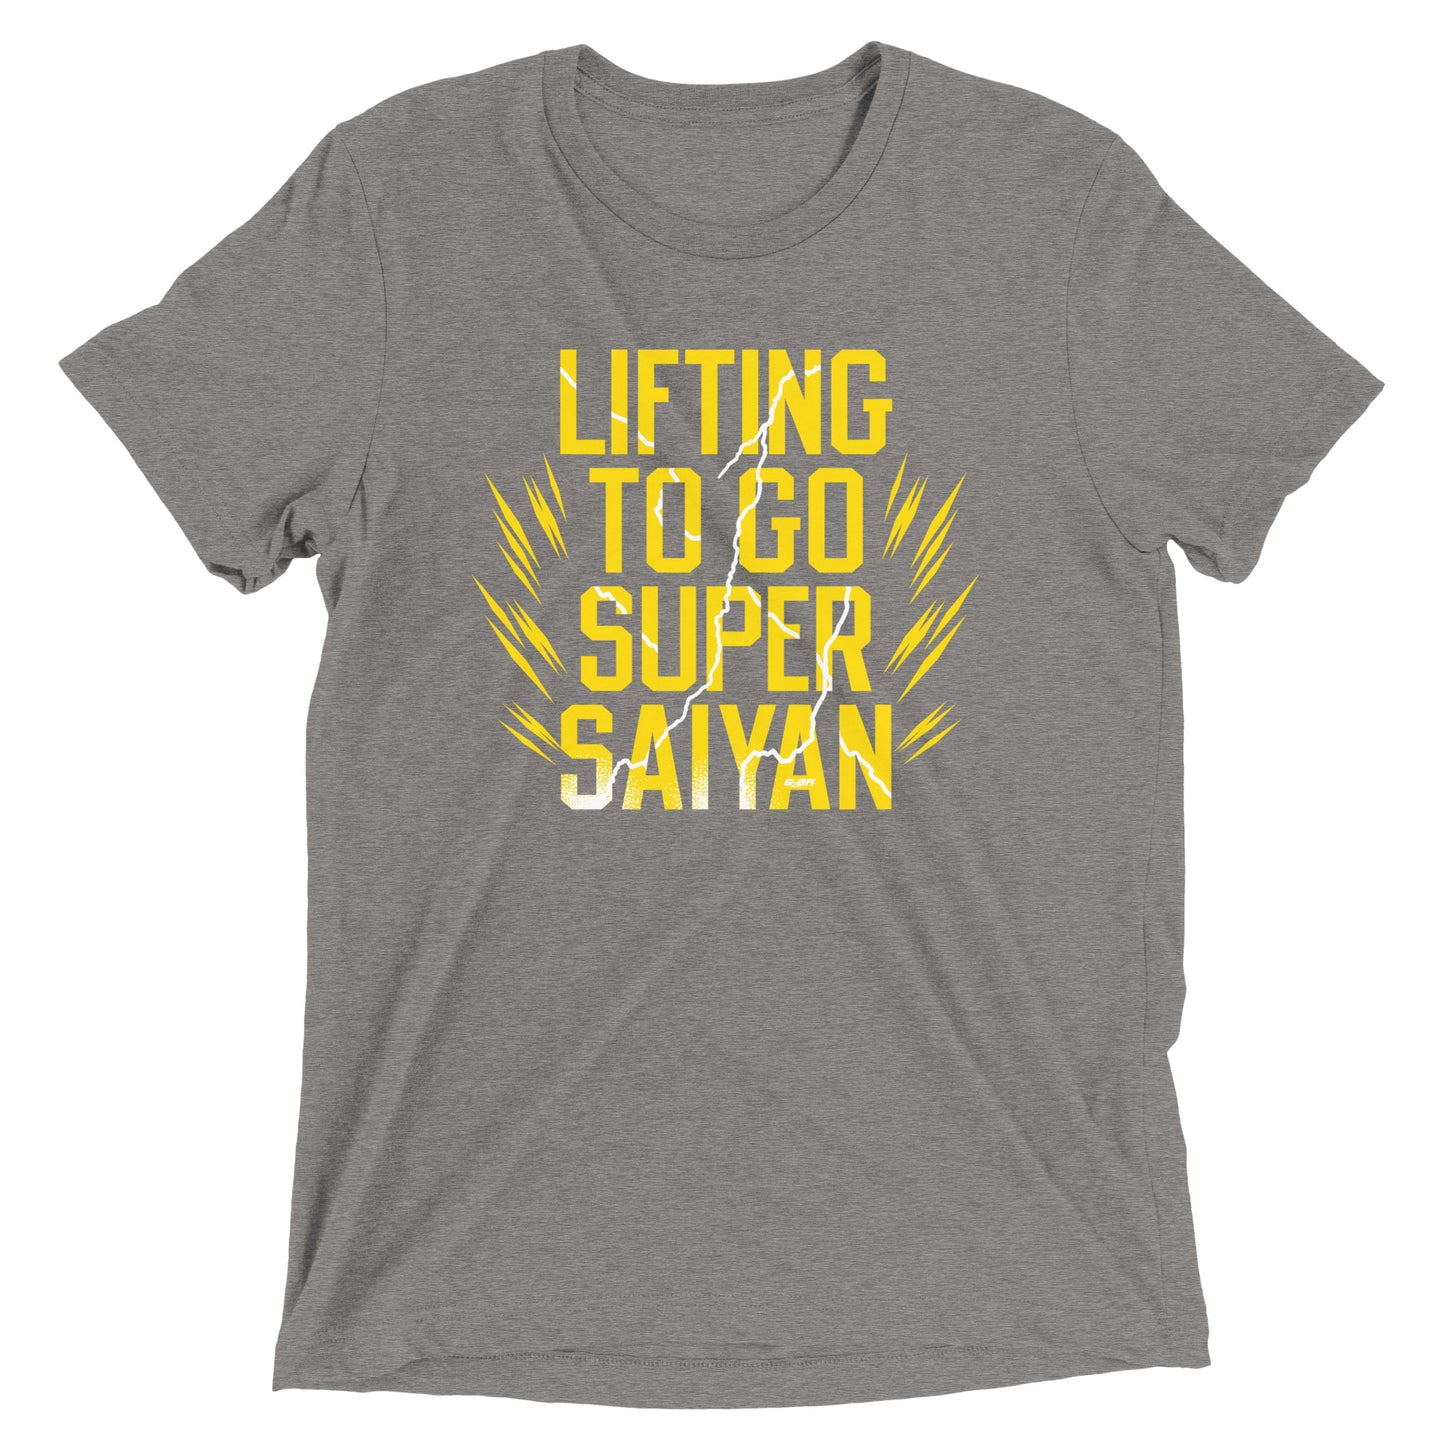 Lifting To Go Super Saiyan Men's T-Shirt